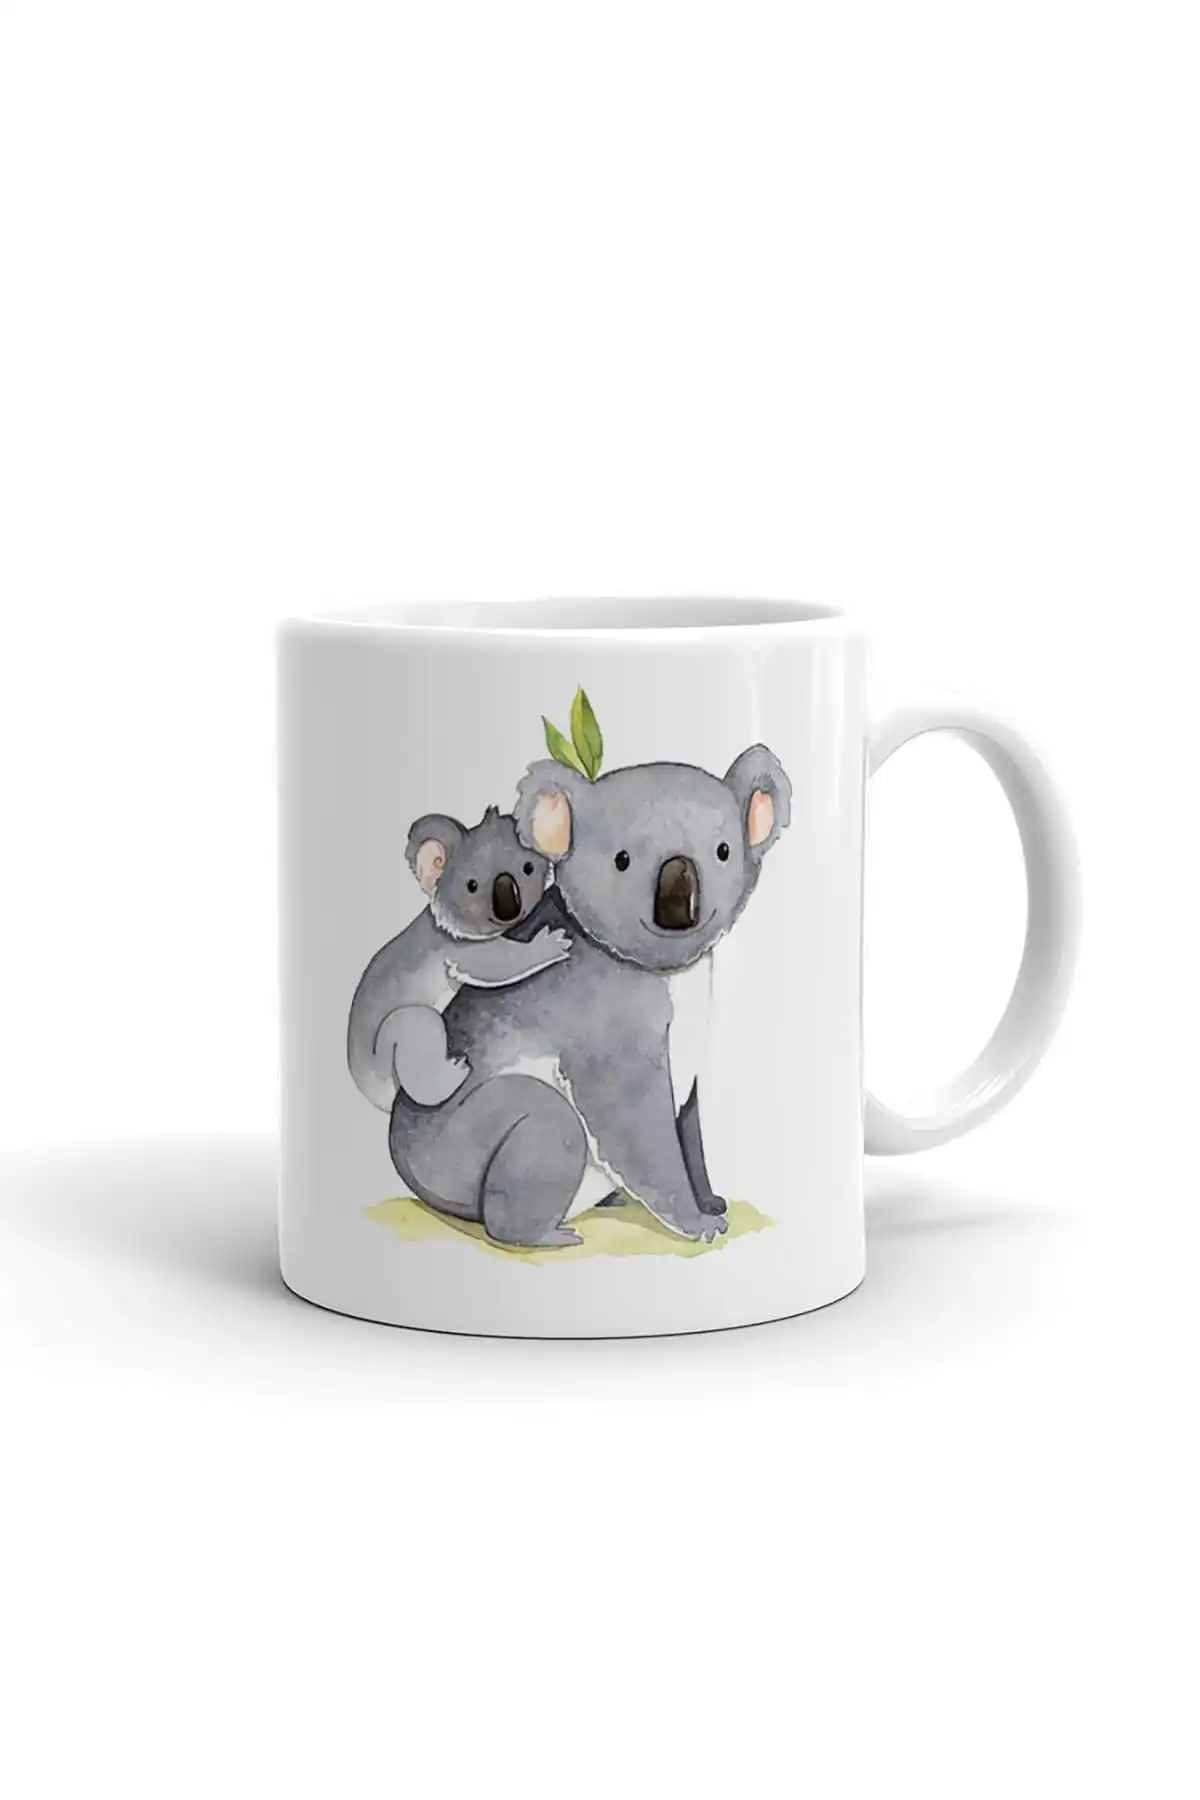 

Cute Koala Ceramic Mug Cup Porcelain Coffee Mugs Tea Cups Hot Drinks Gift Items